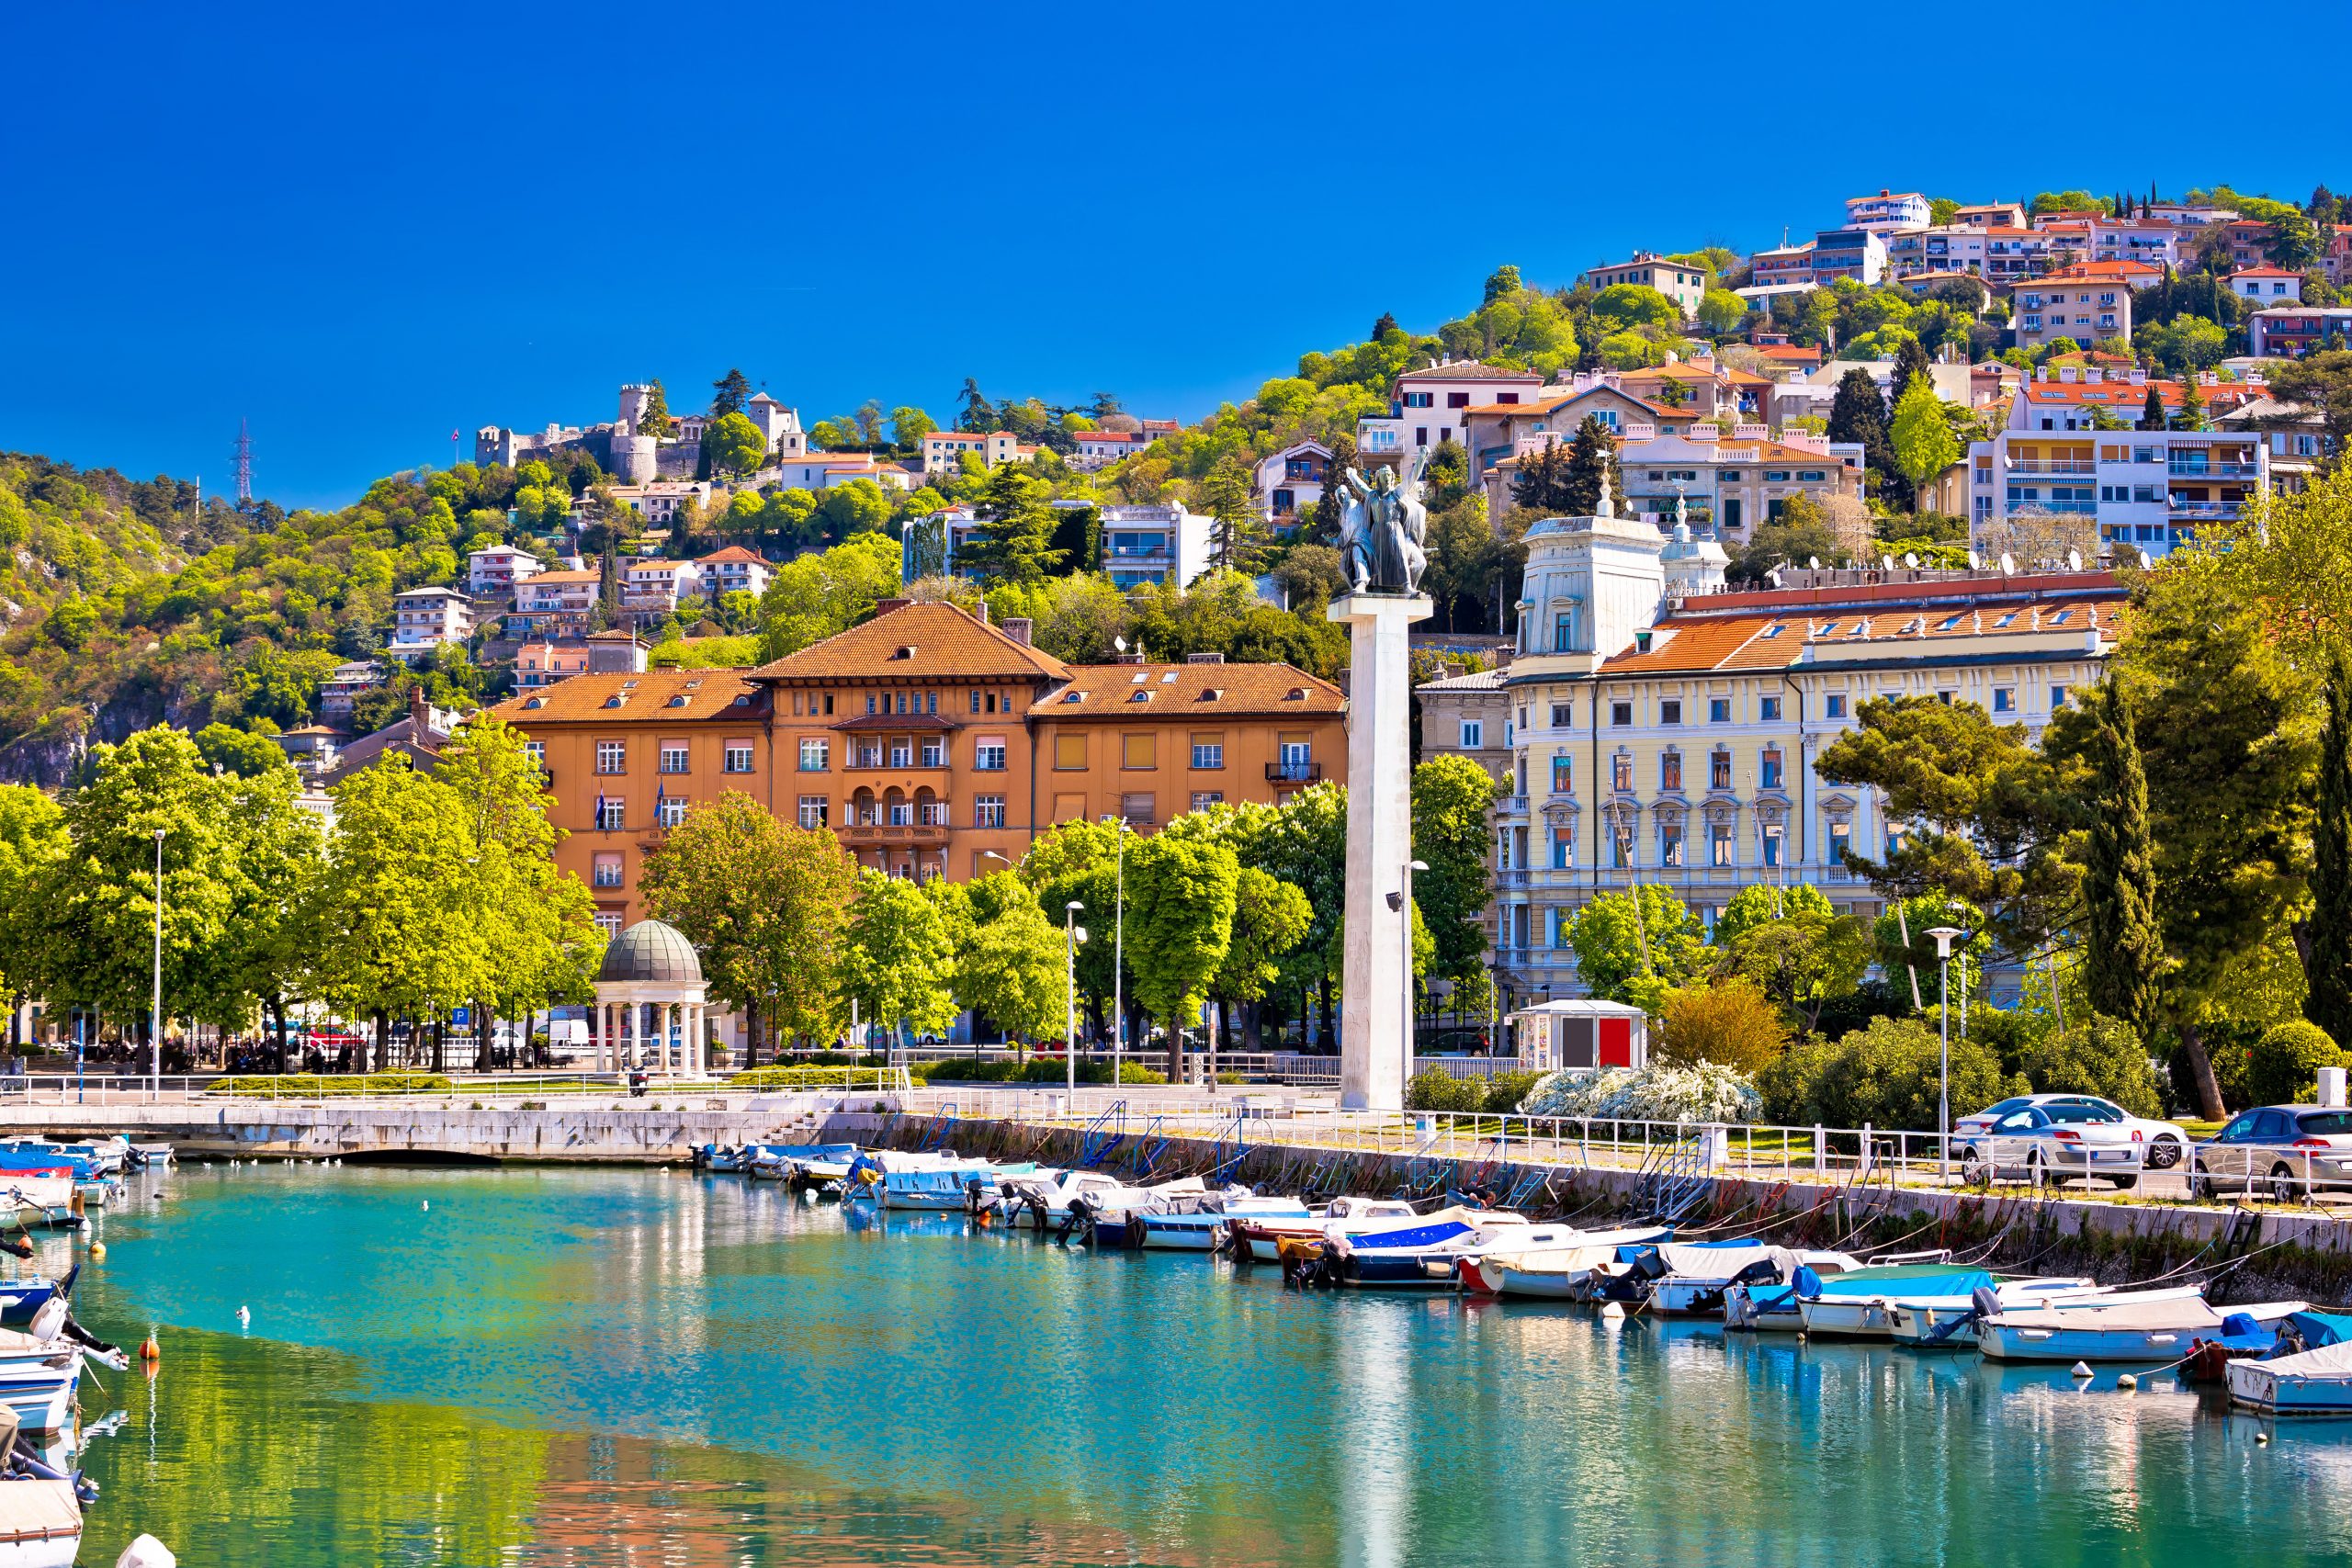 Explore The Beautiful City Of Riejka During Your Rijeka City Tour